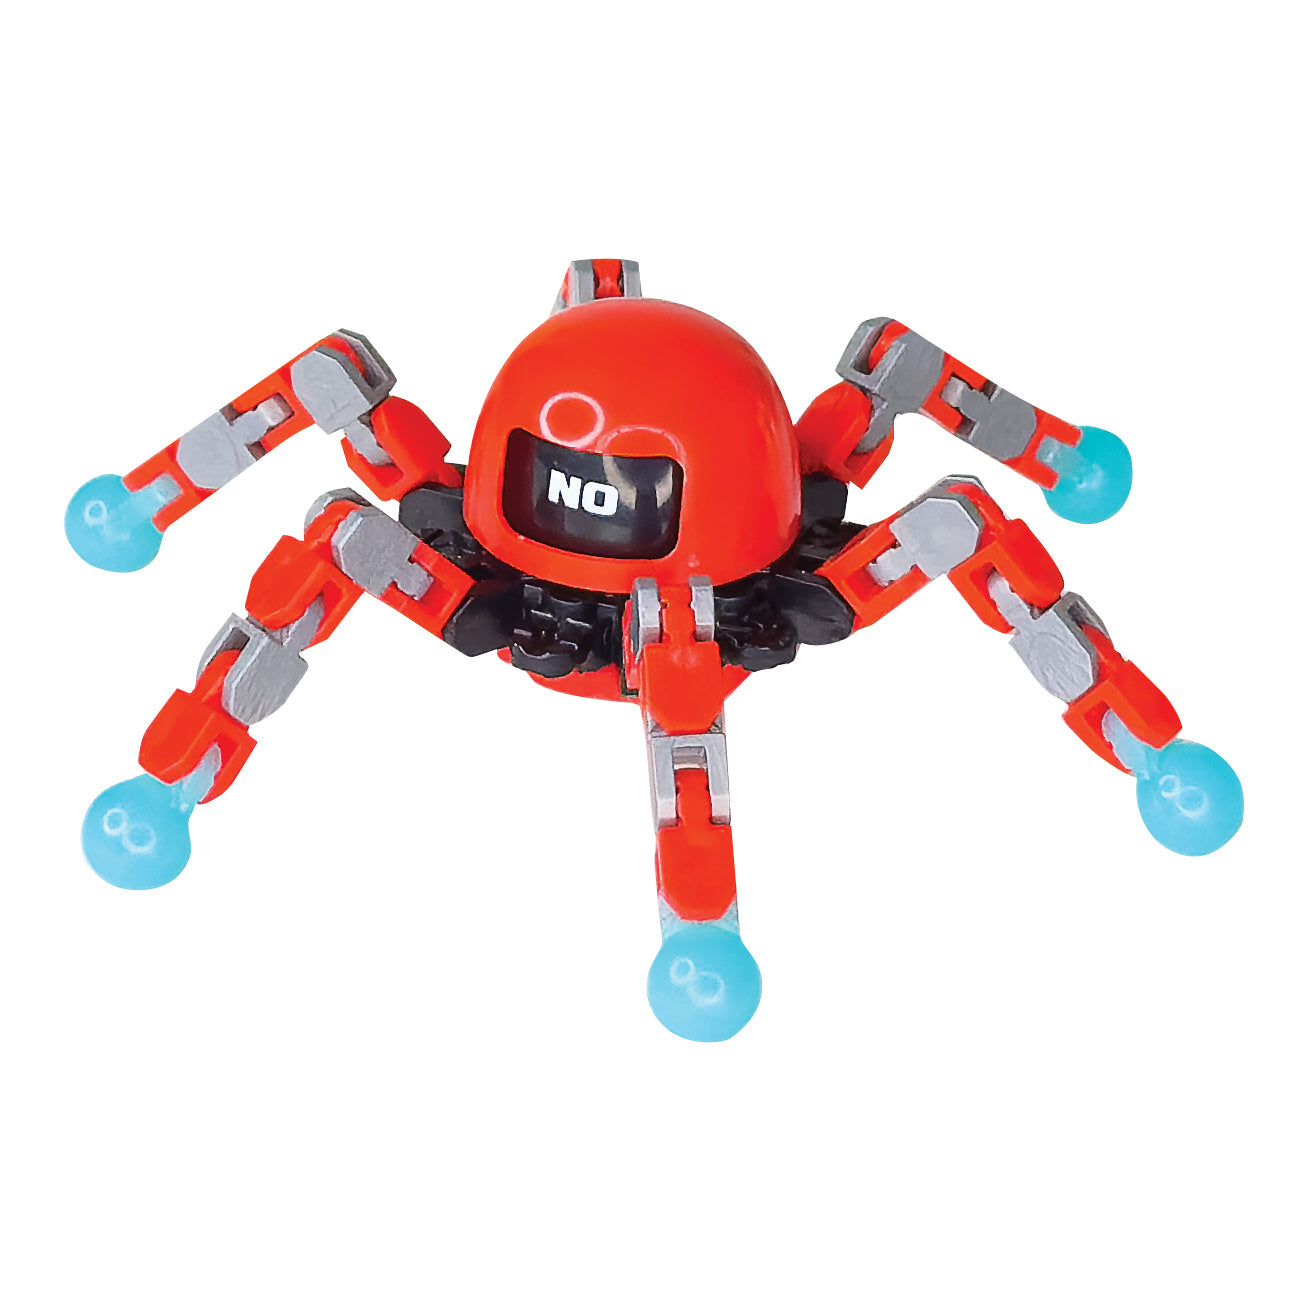 Robot Spider Spinning Fidget Toys